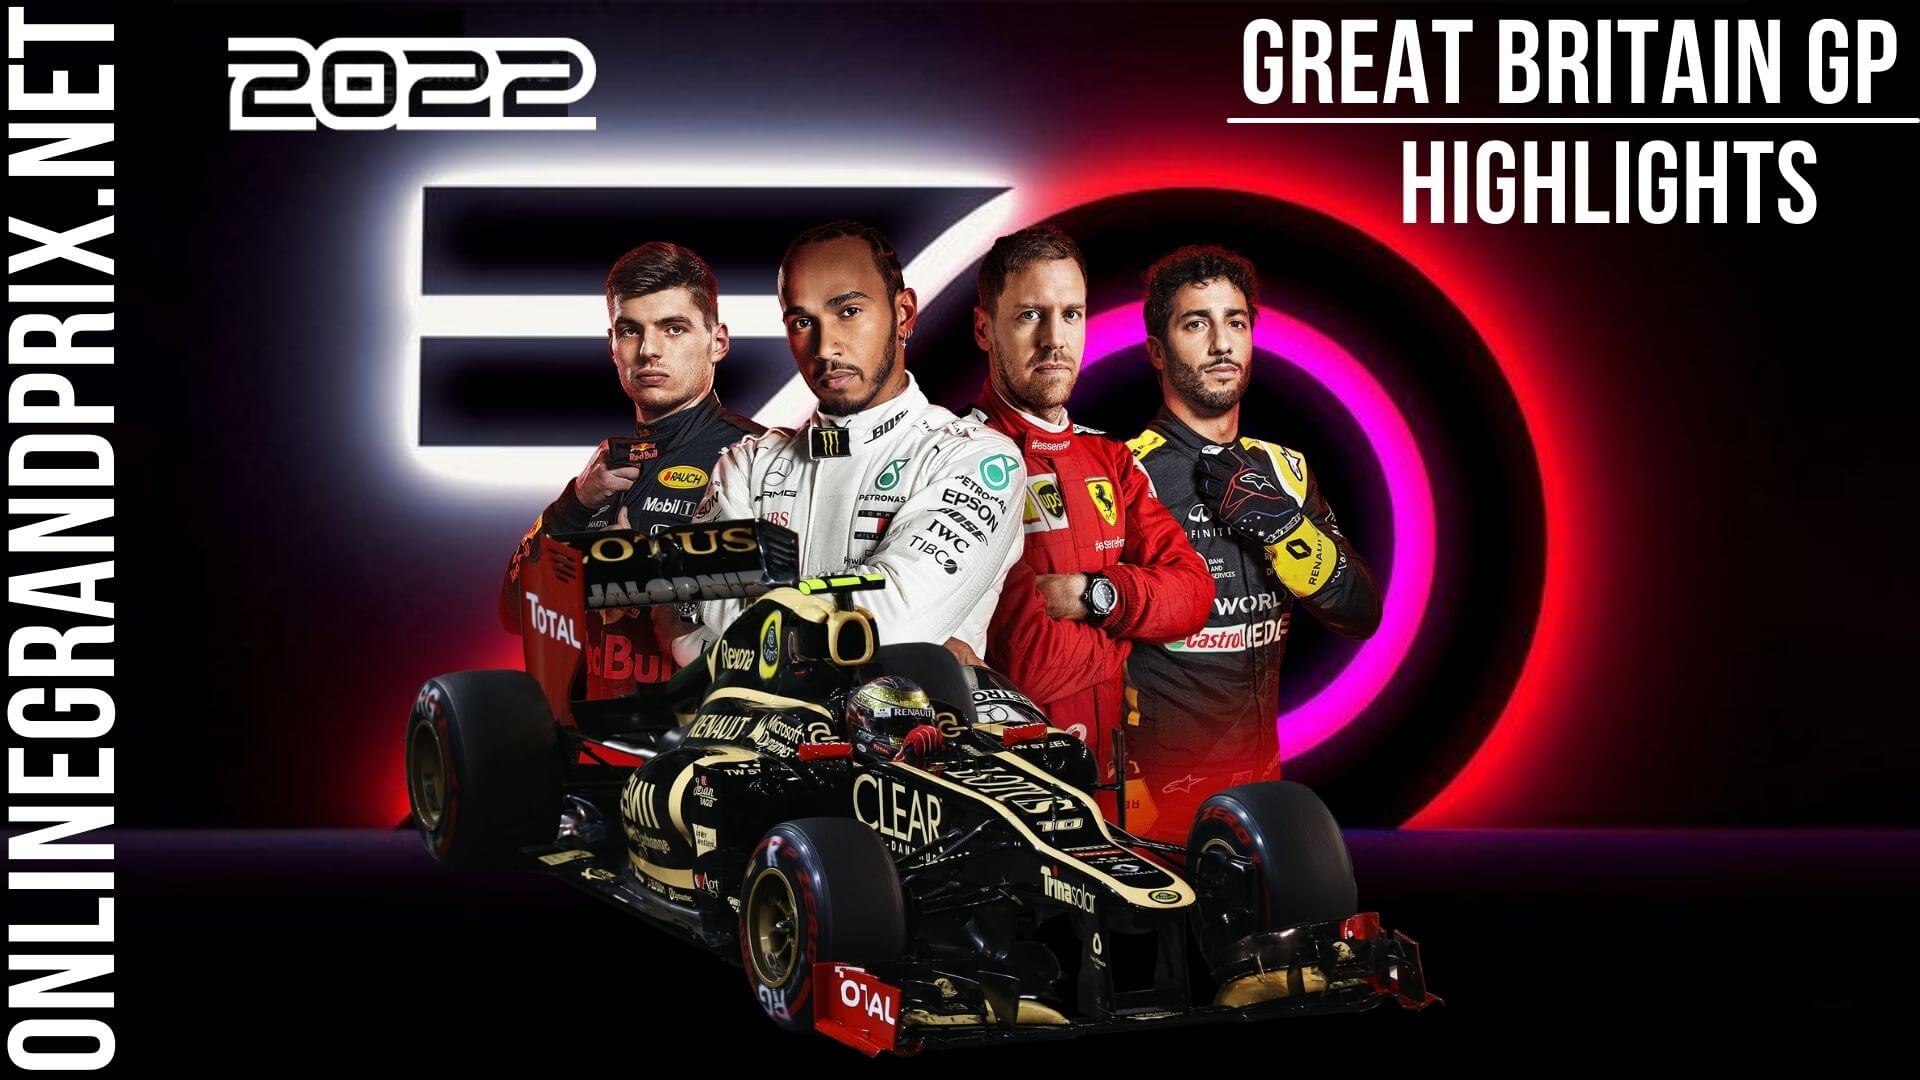 Great Britain GP F1 Highlights 2022